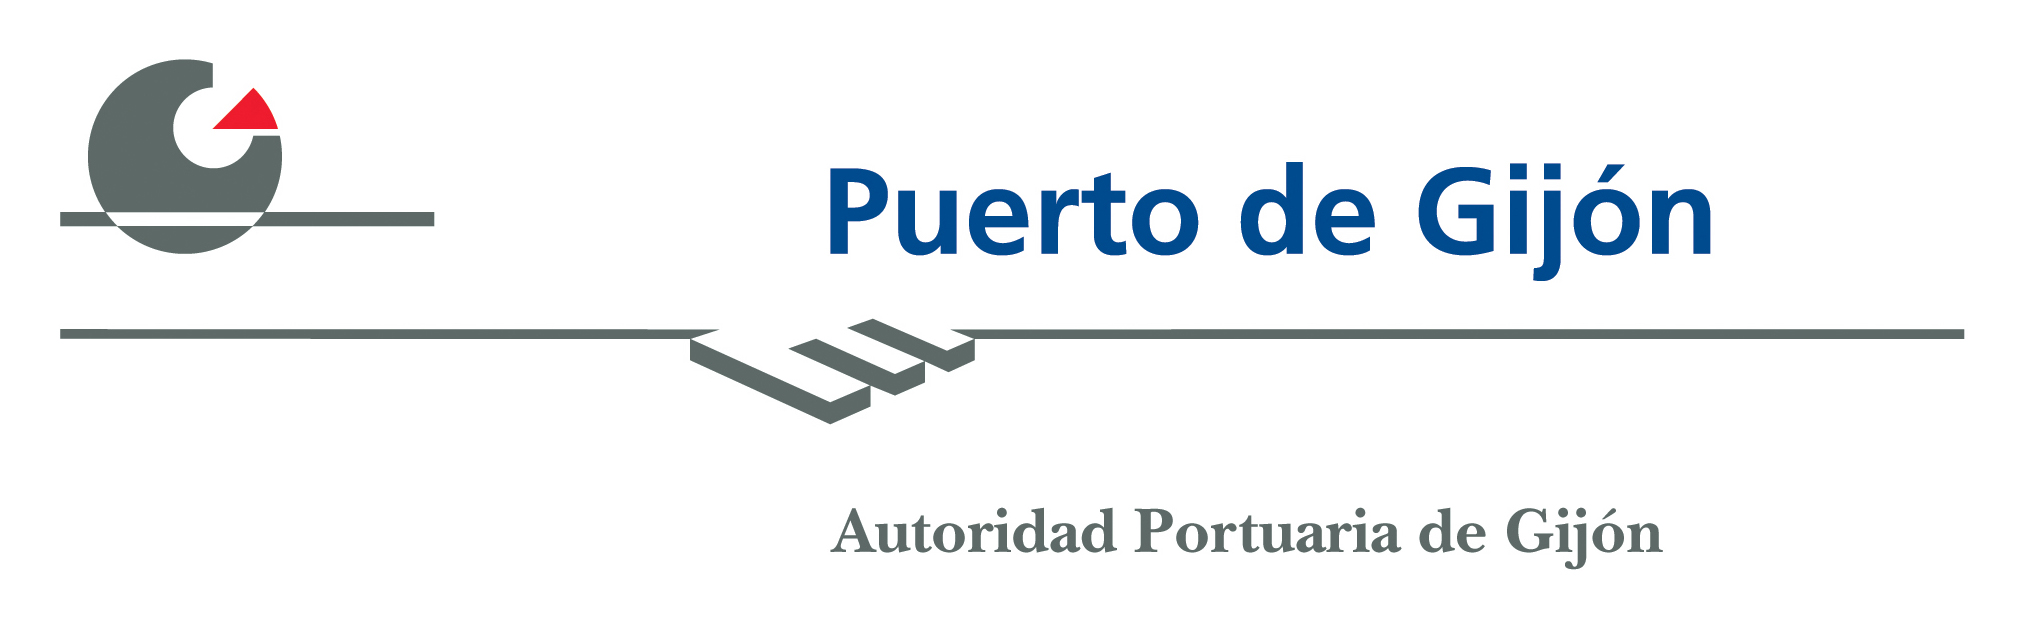 Autoridad portuaria de Gijón